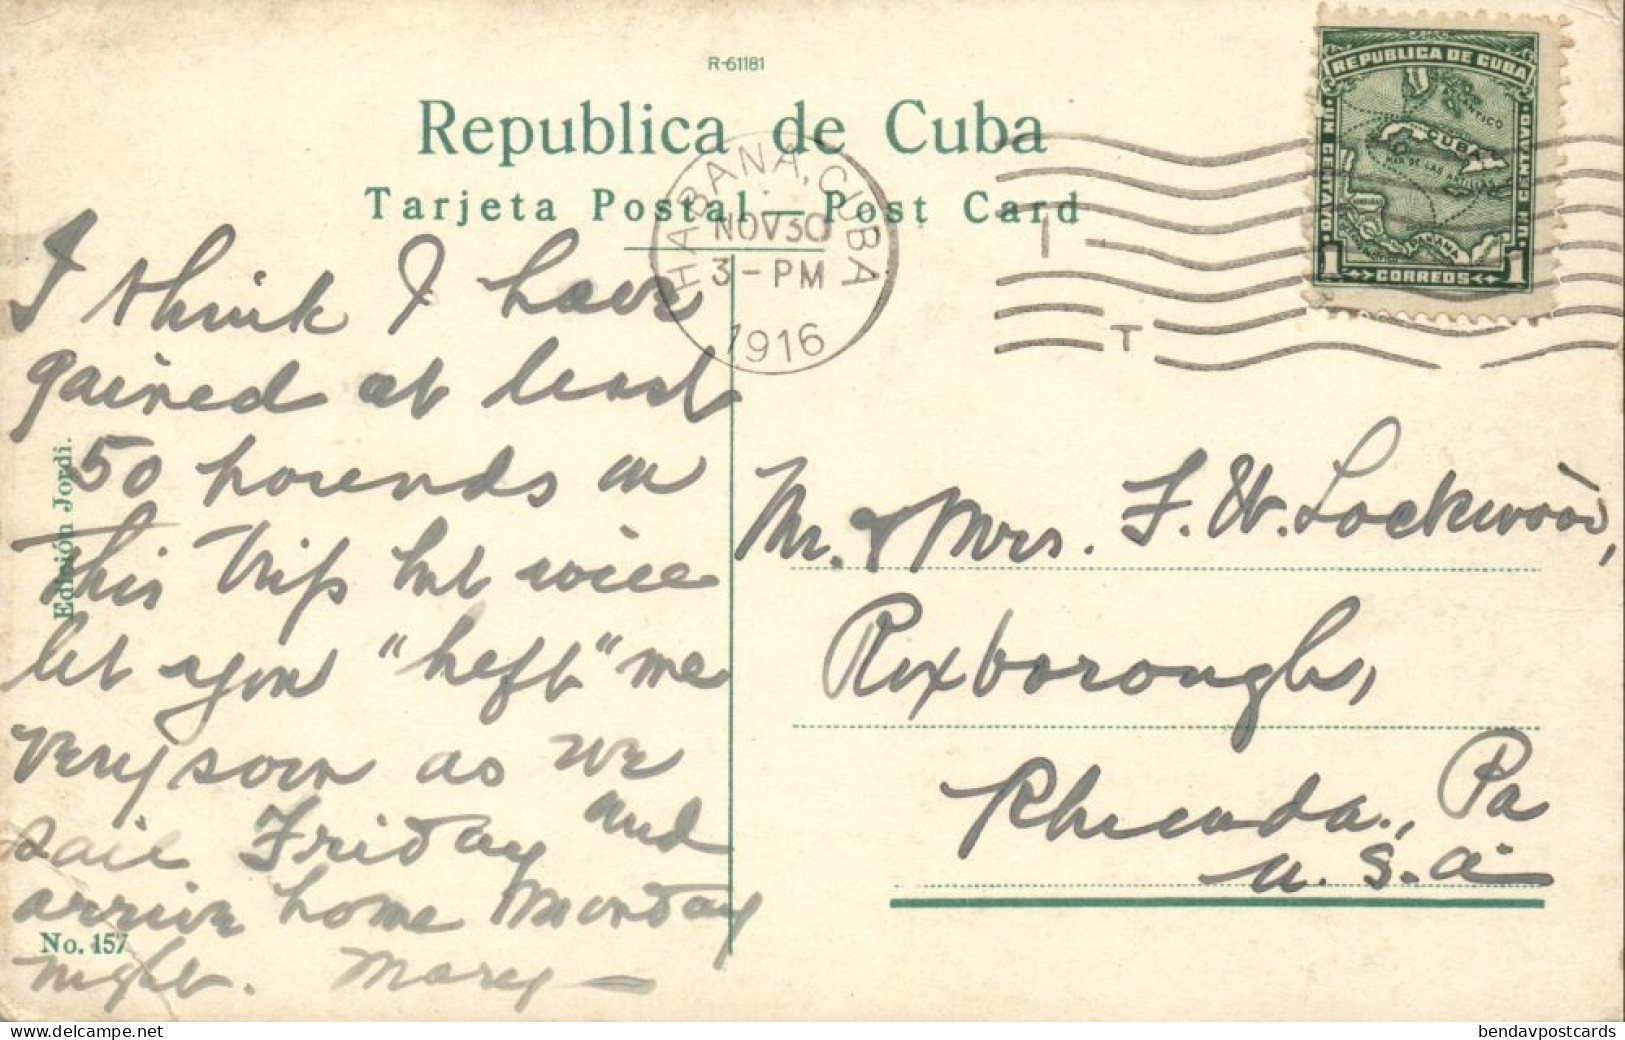 Cuba, HAVANA, Way Up To Morro Castle (1916) Postcard - Cuba